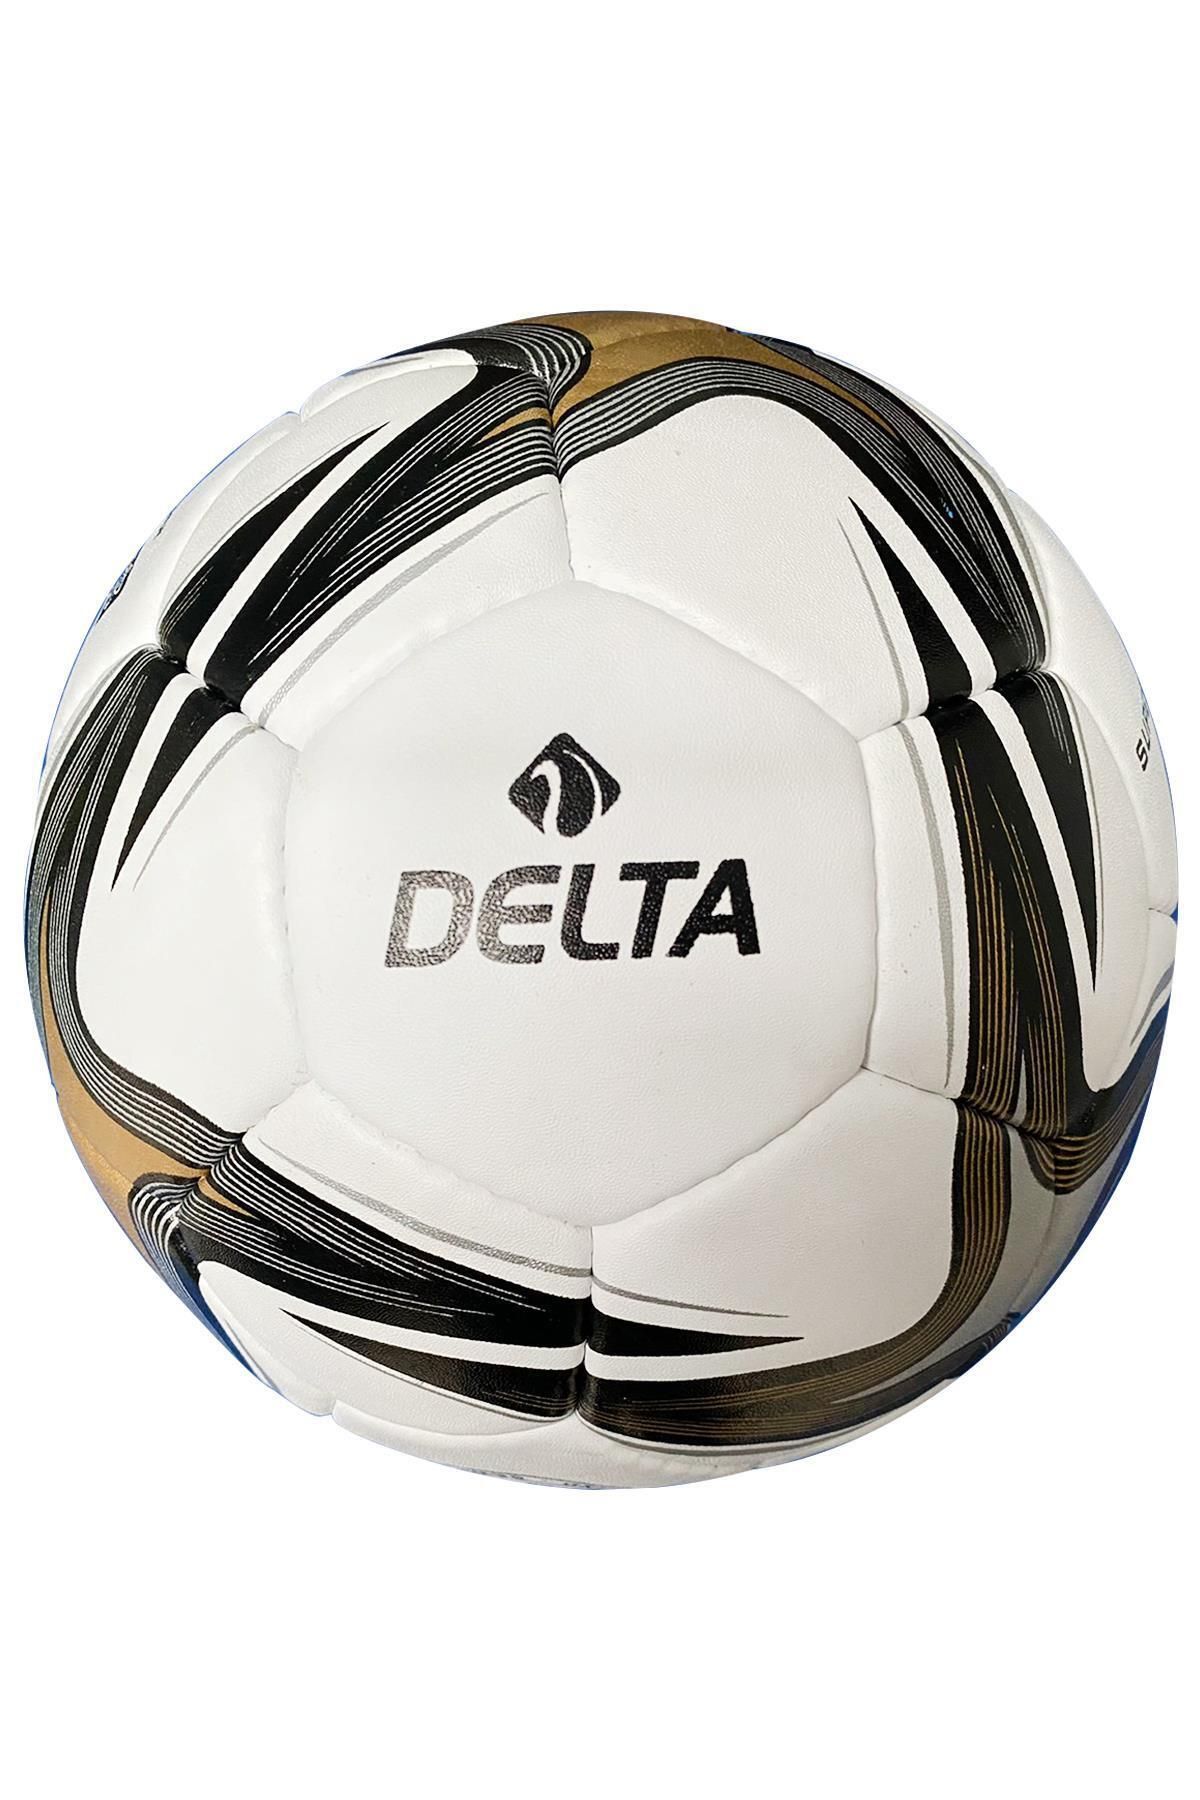 Delta Beyaz Super League El Dikişli 5 Numara Dura-Strong Futbol Topu Pompa dahil değildir 5 Numara Suni /